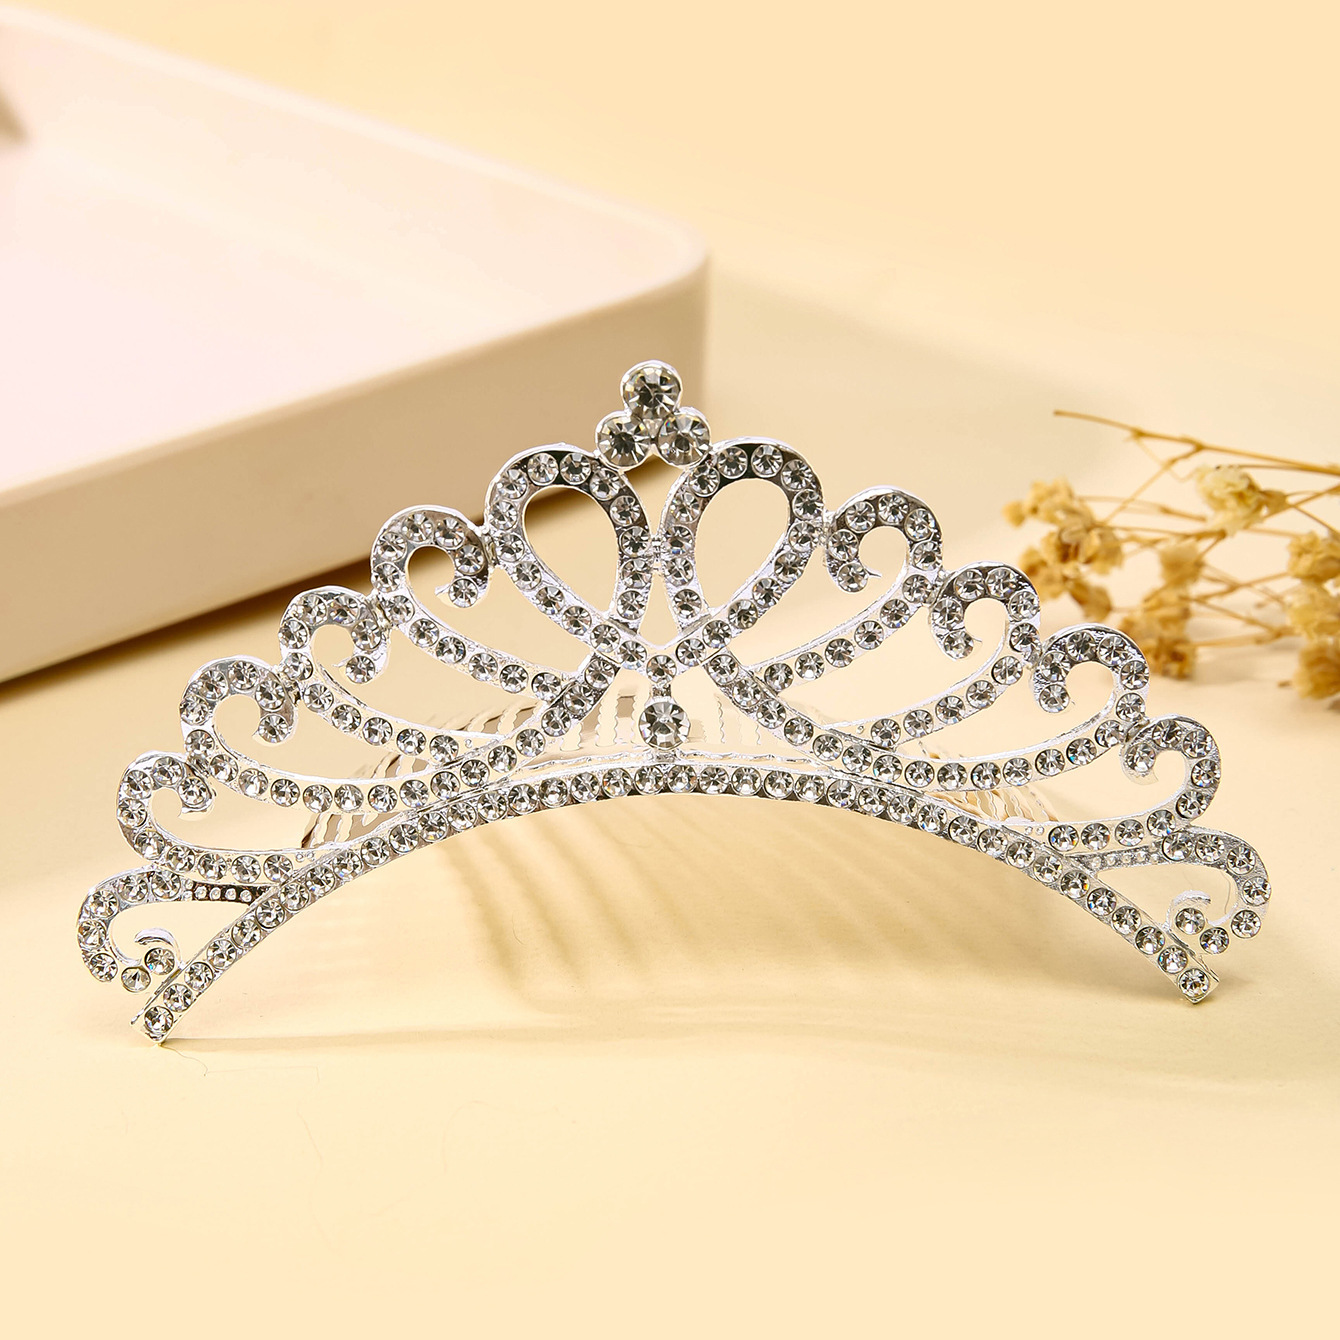 Silver Princess hair comb crown